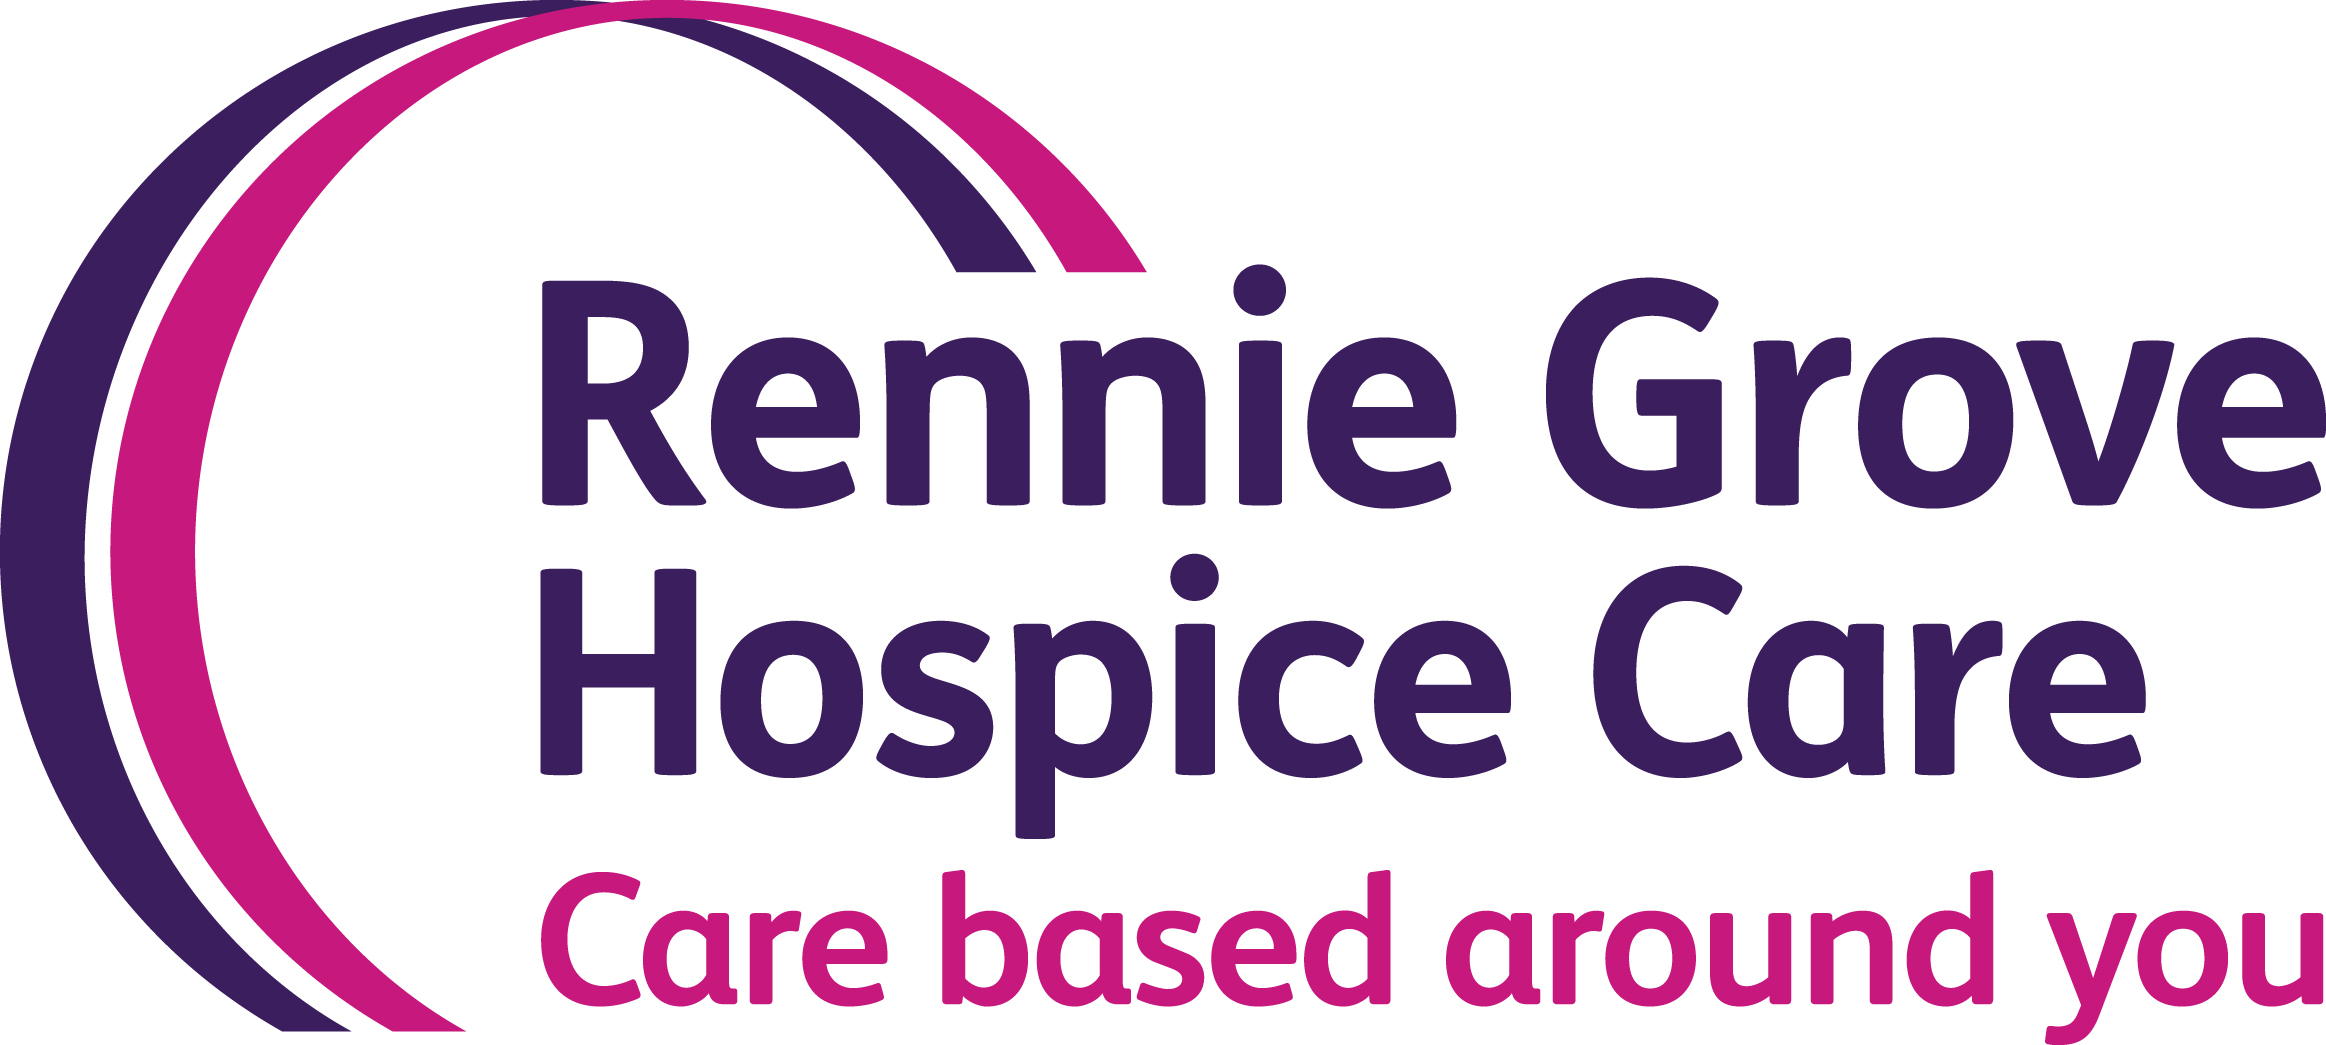 Rennie Grove House Hospice